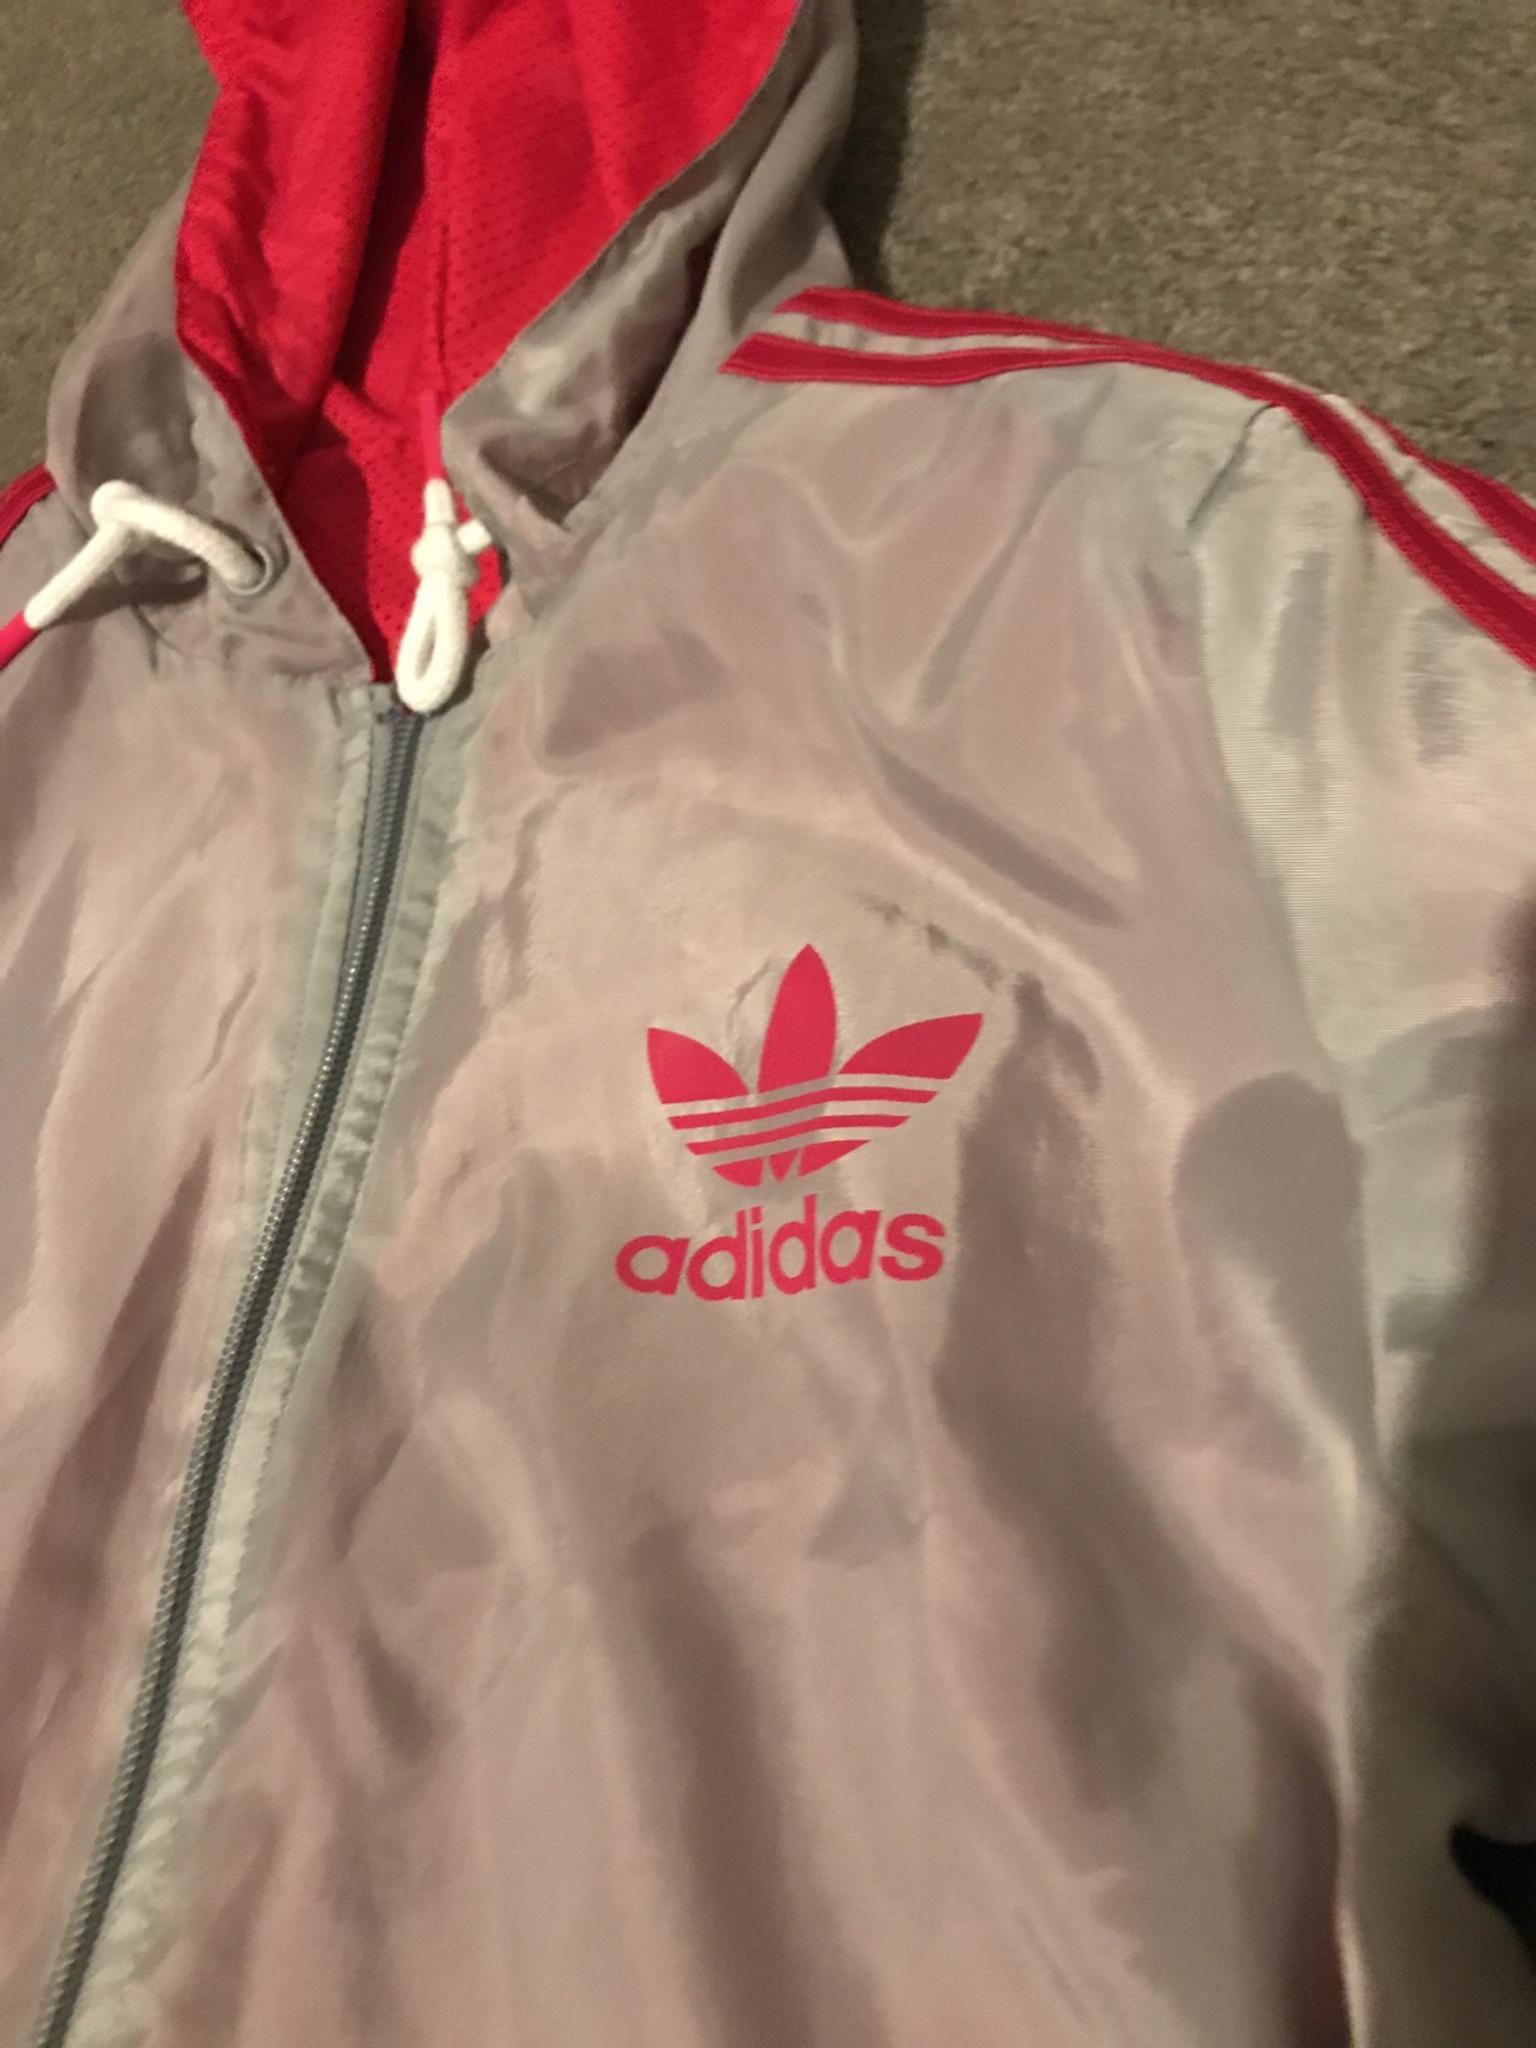 adidas jacket pink and white